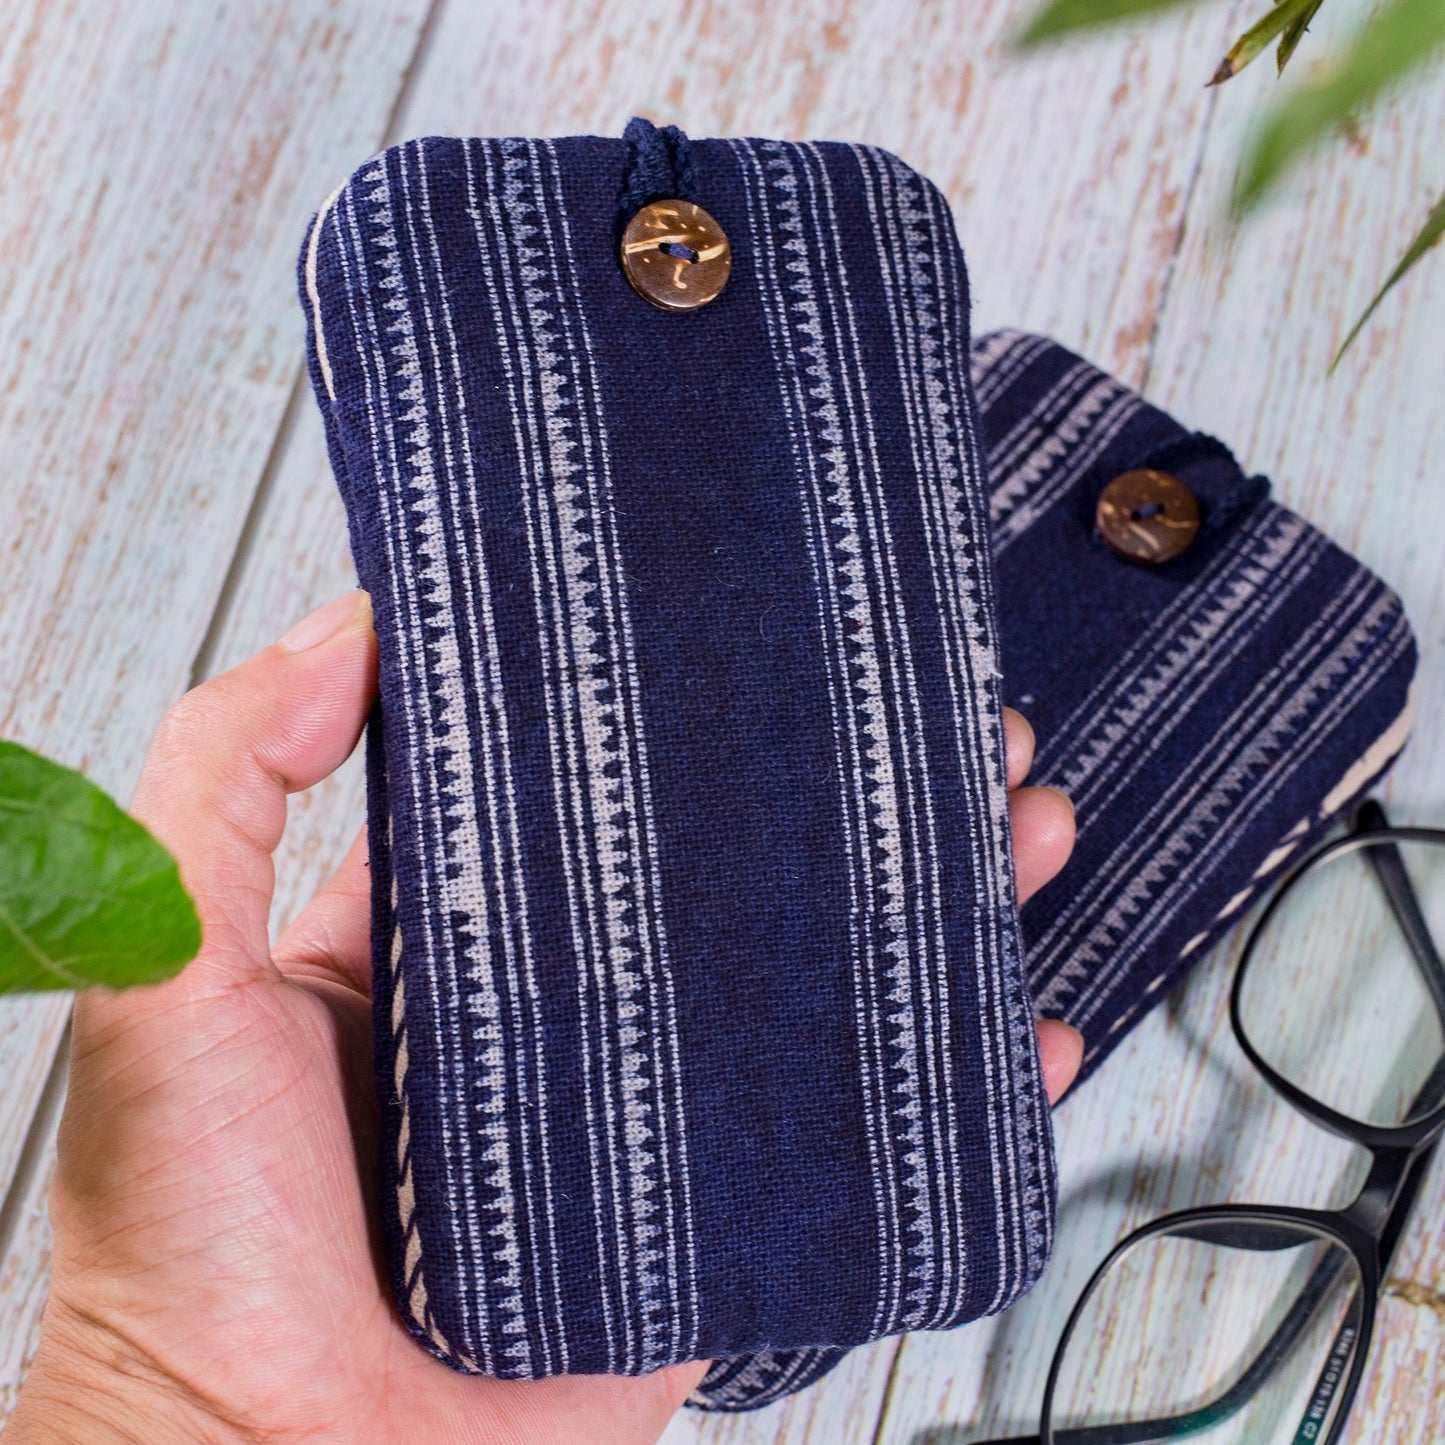 Phone case / glass case, authentic H'mong batik fabric, shock absorption layer